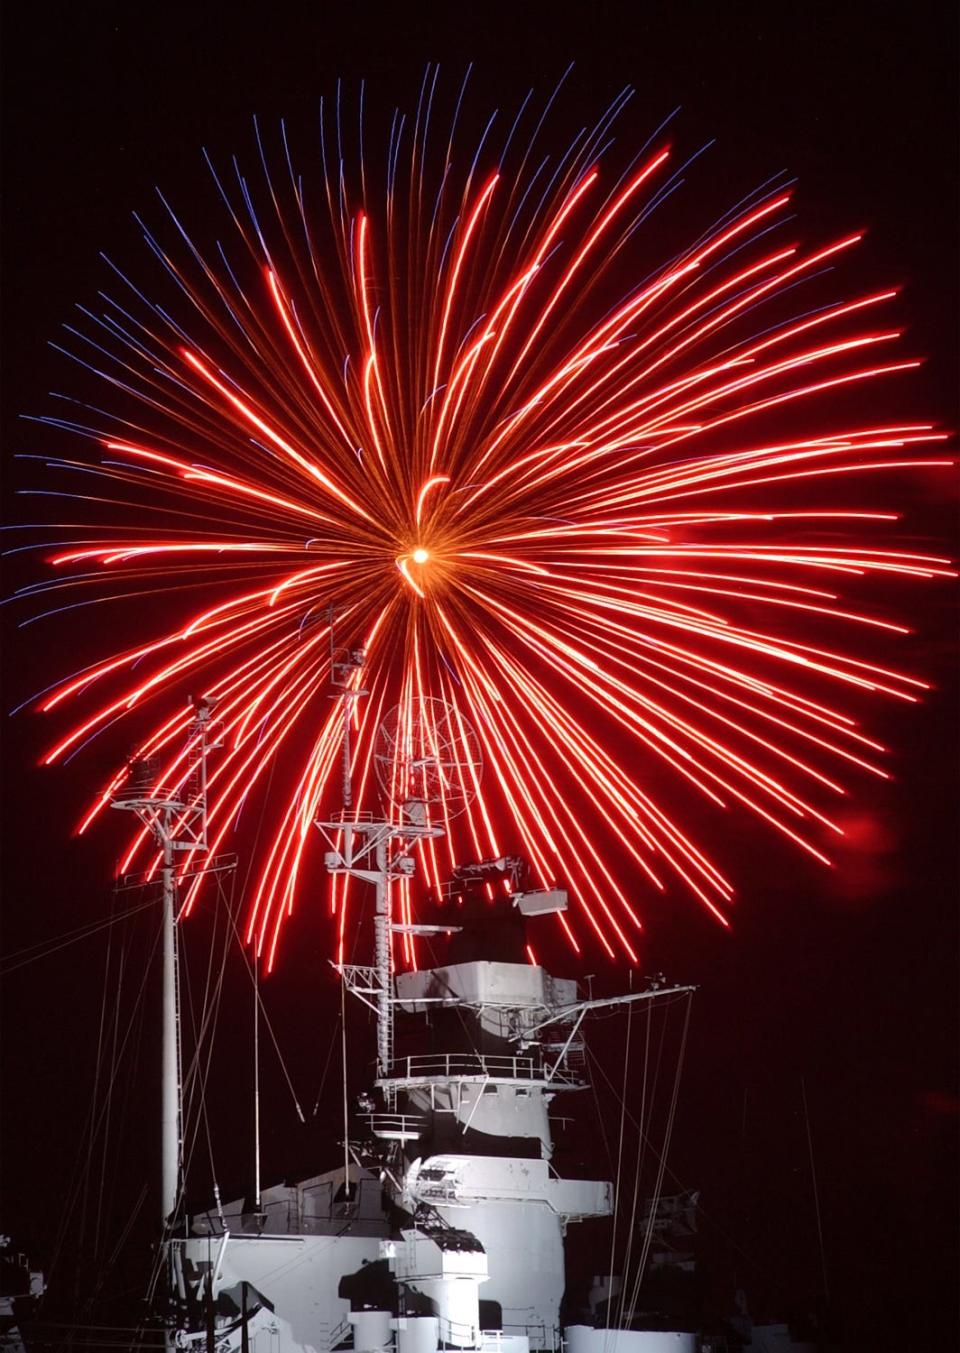 In this file photo, a fireworks burst explodes over the  Battleship Massachusetts radar tower at Battleship Cove in Fall River.